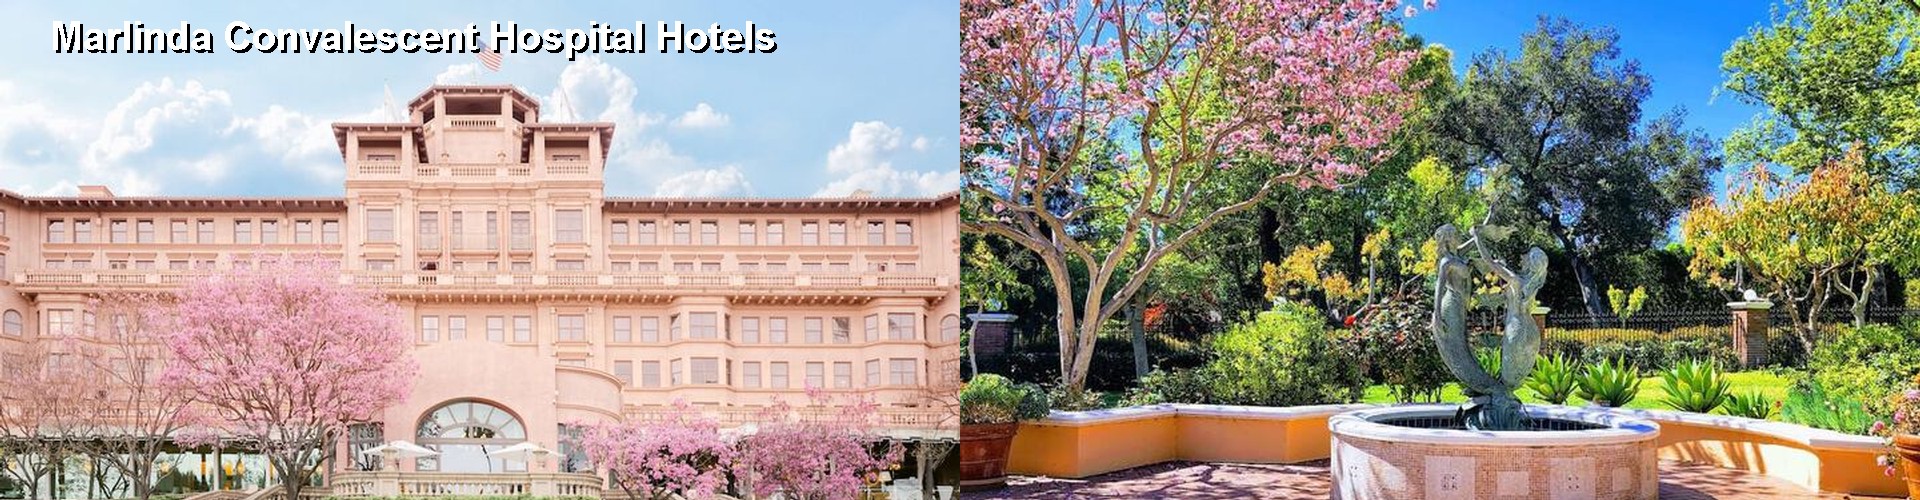 5 Best Hotels near Marlinda Convalescent Hospital